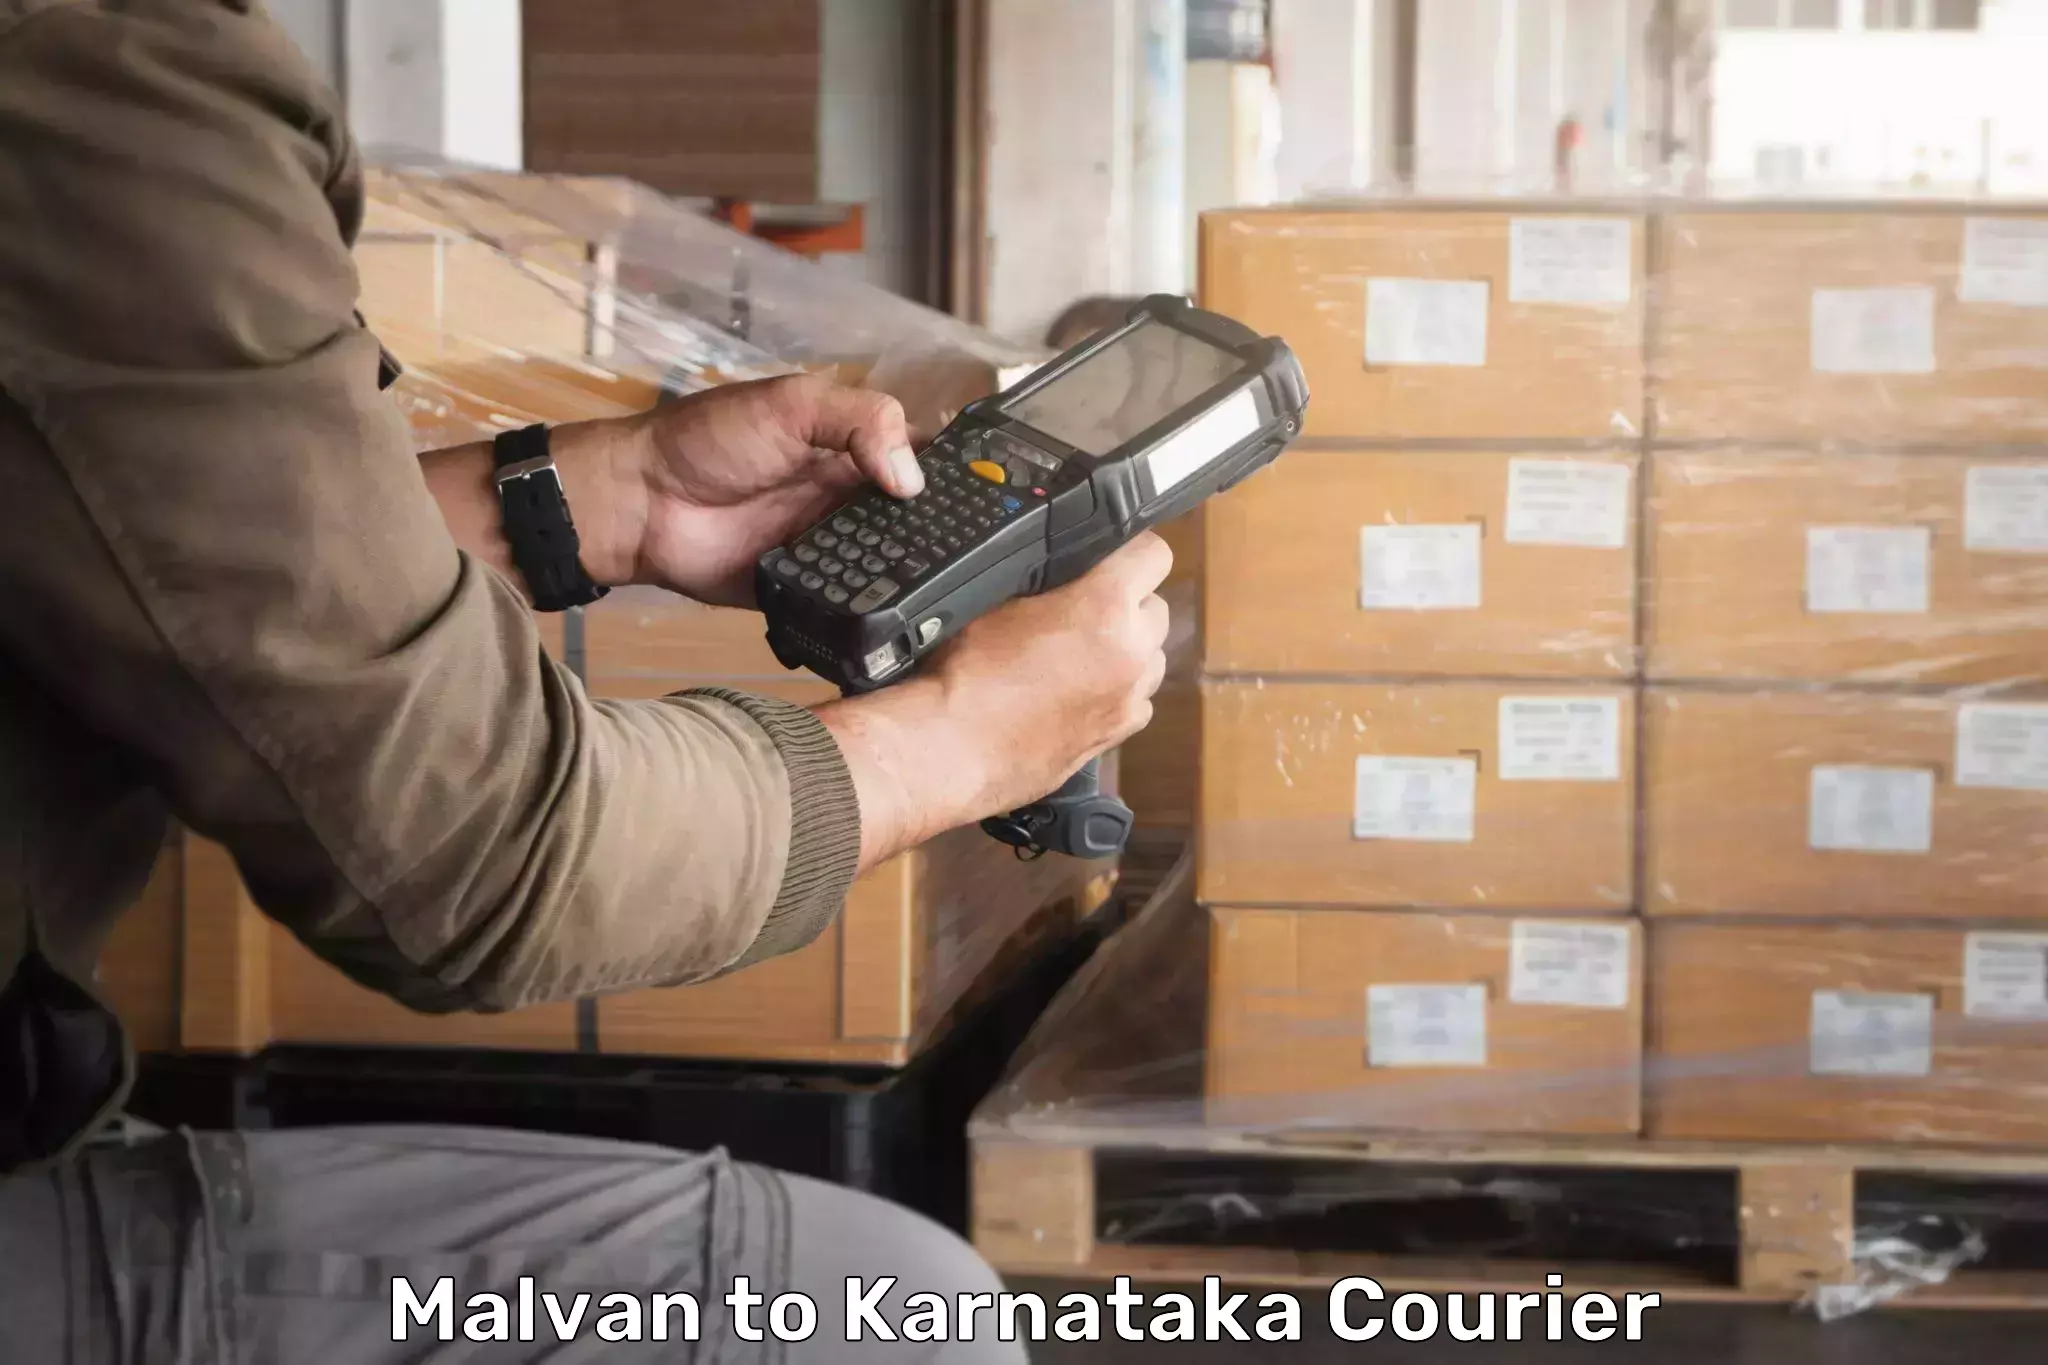 Professional courier handling Malvan to Karnataka